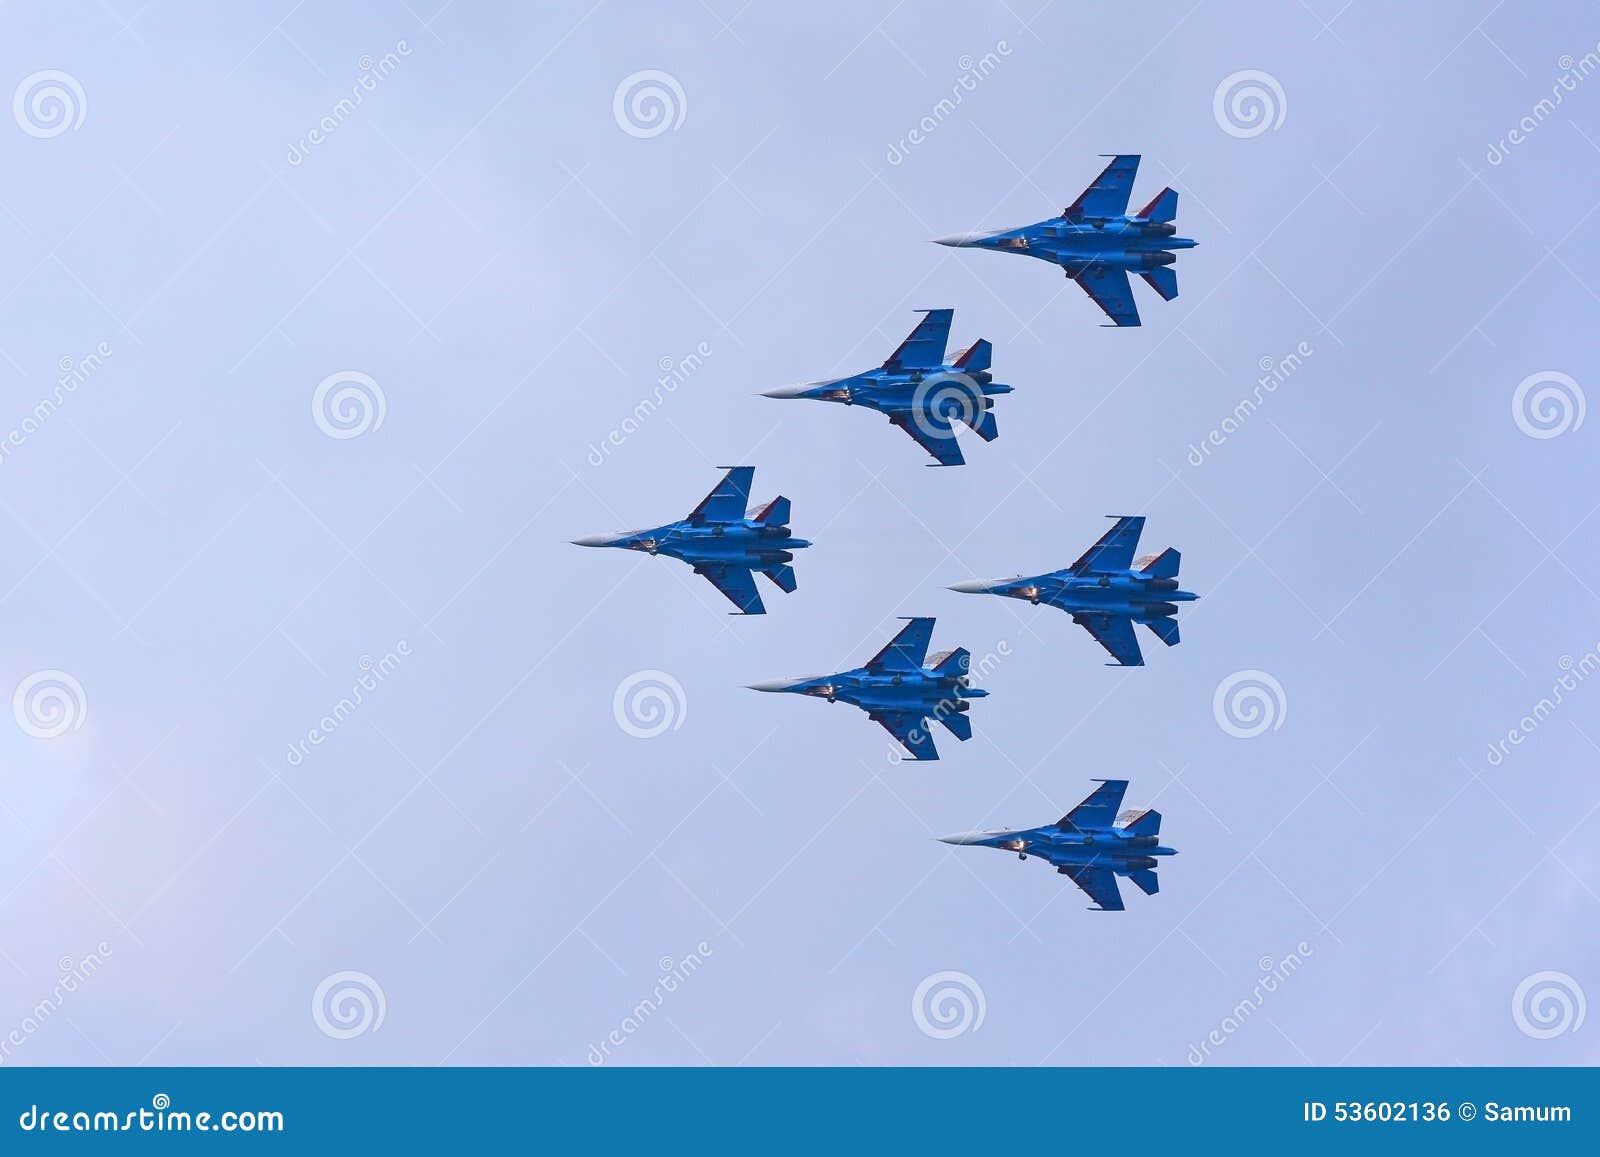 group flight of russian highest pilotage team